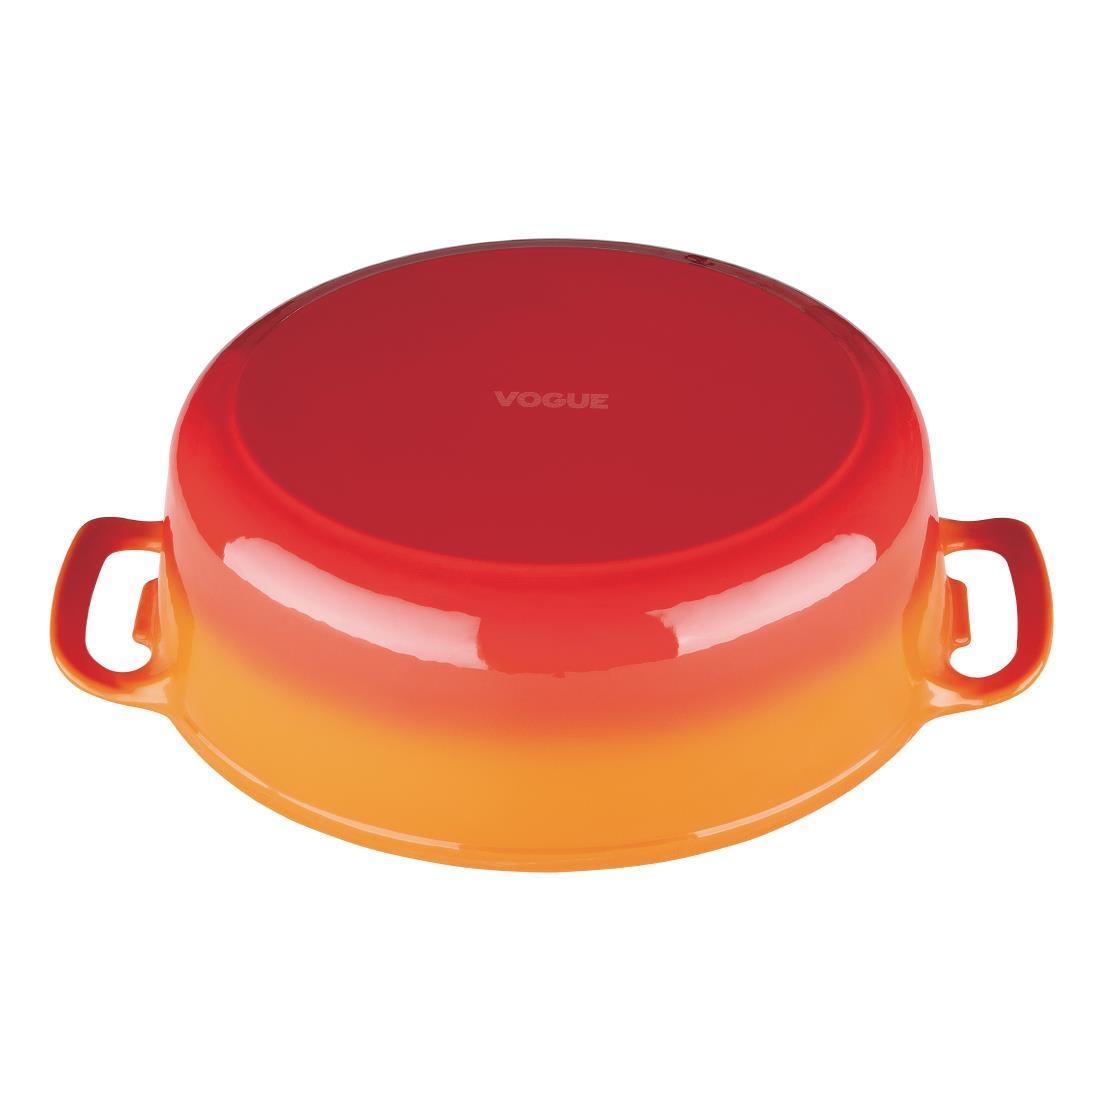 Vogue Orange Oval Casserole Dish 6Ltr - GH312  - 7